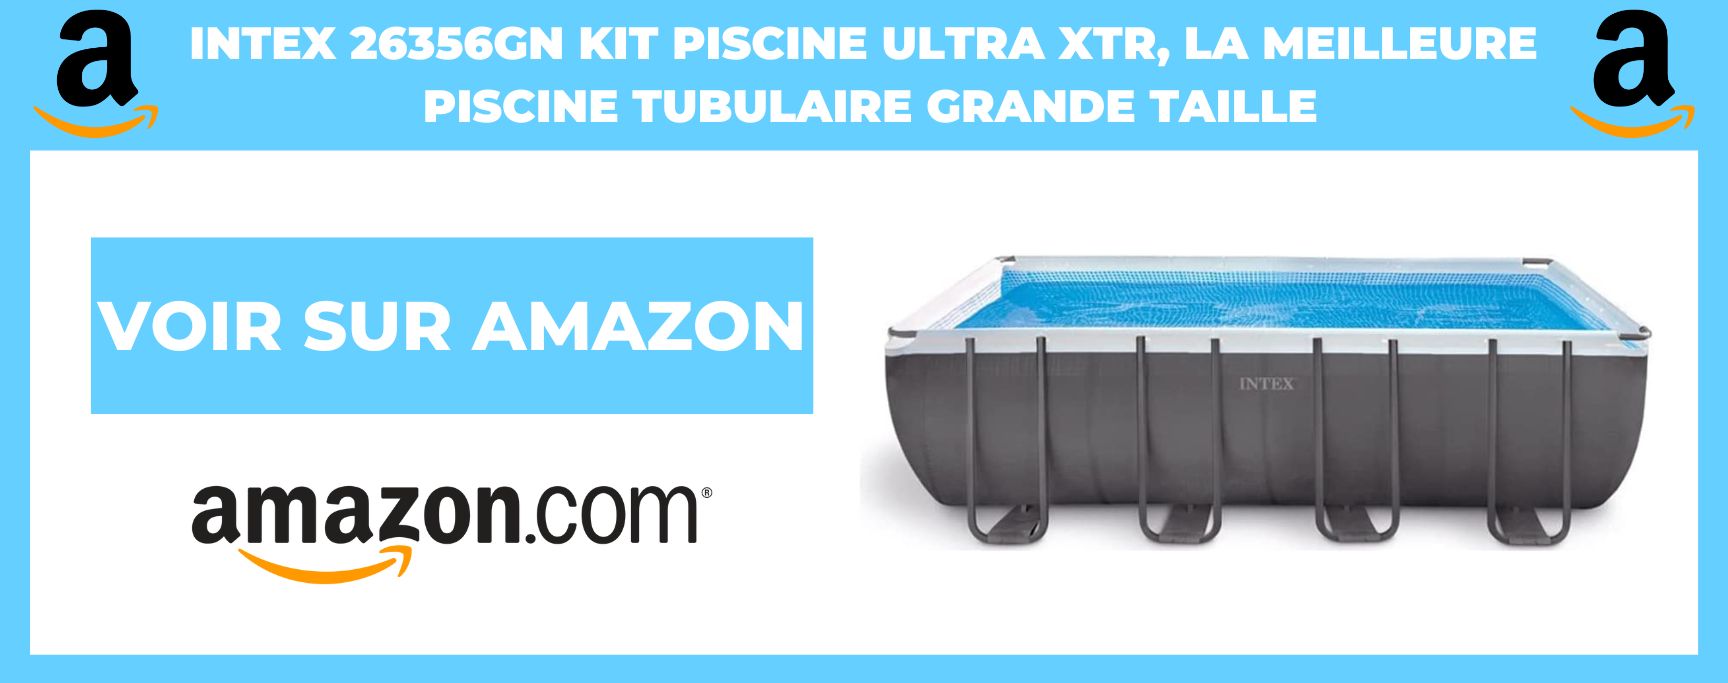 INTEX 26356GN kit piscine ultra Xtr